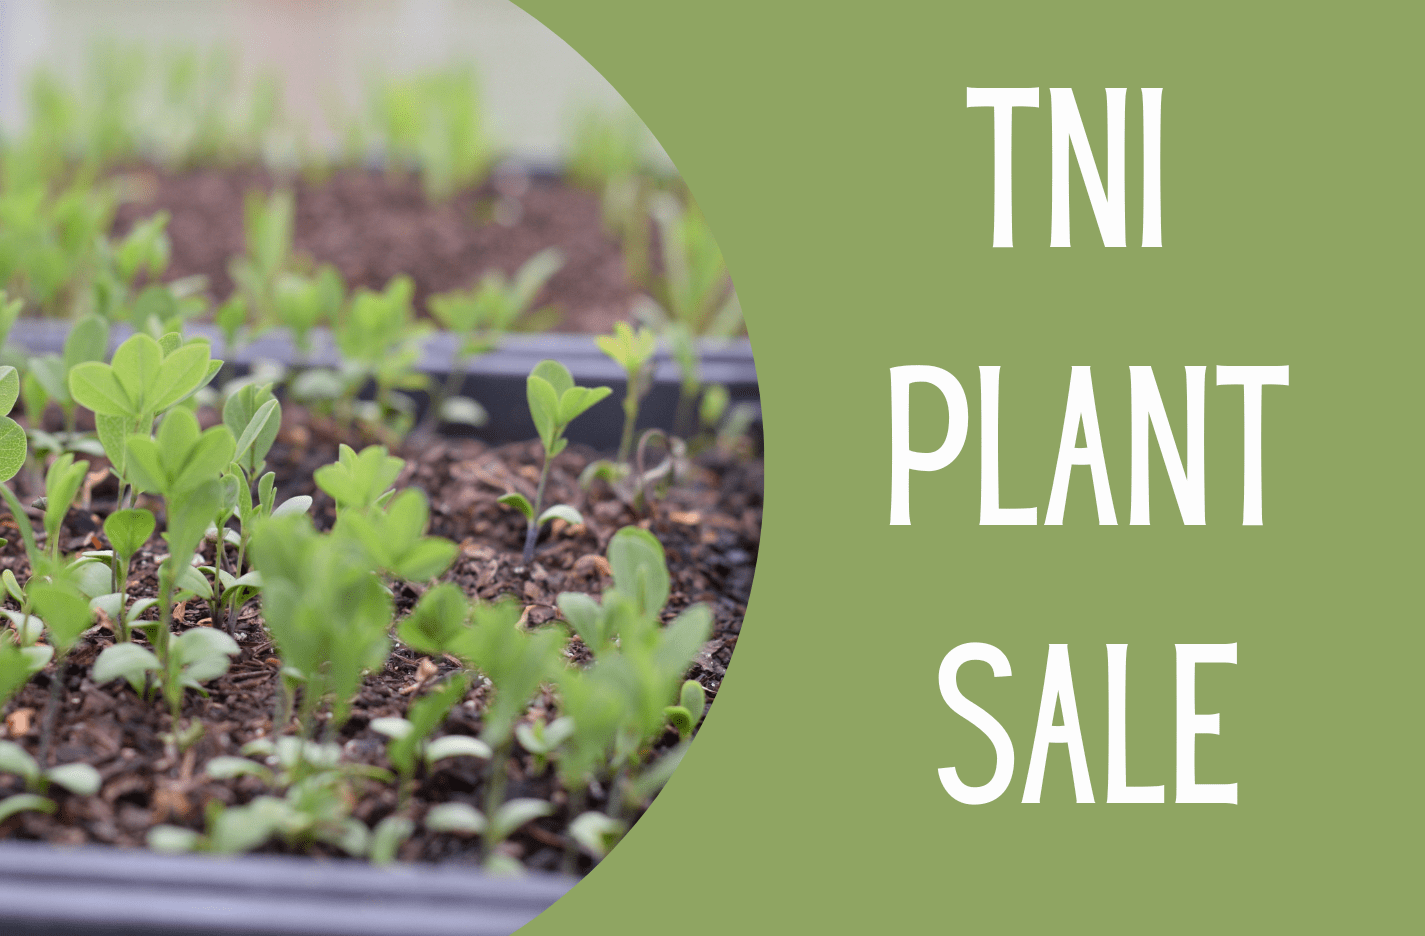 SAVE THE DATE: TNI Native Plant Sale